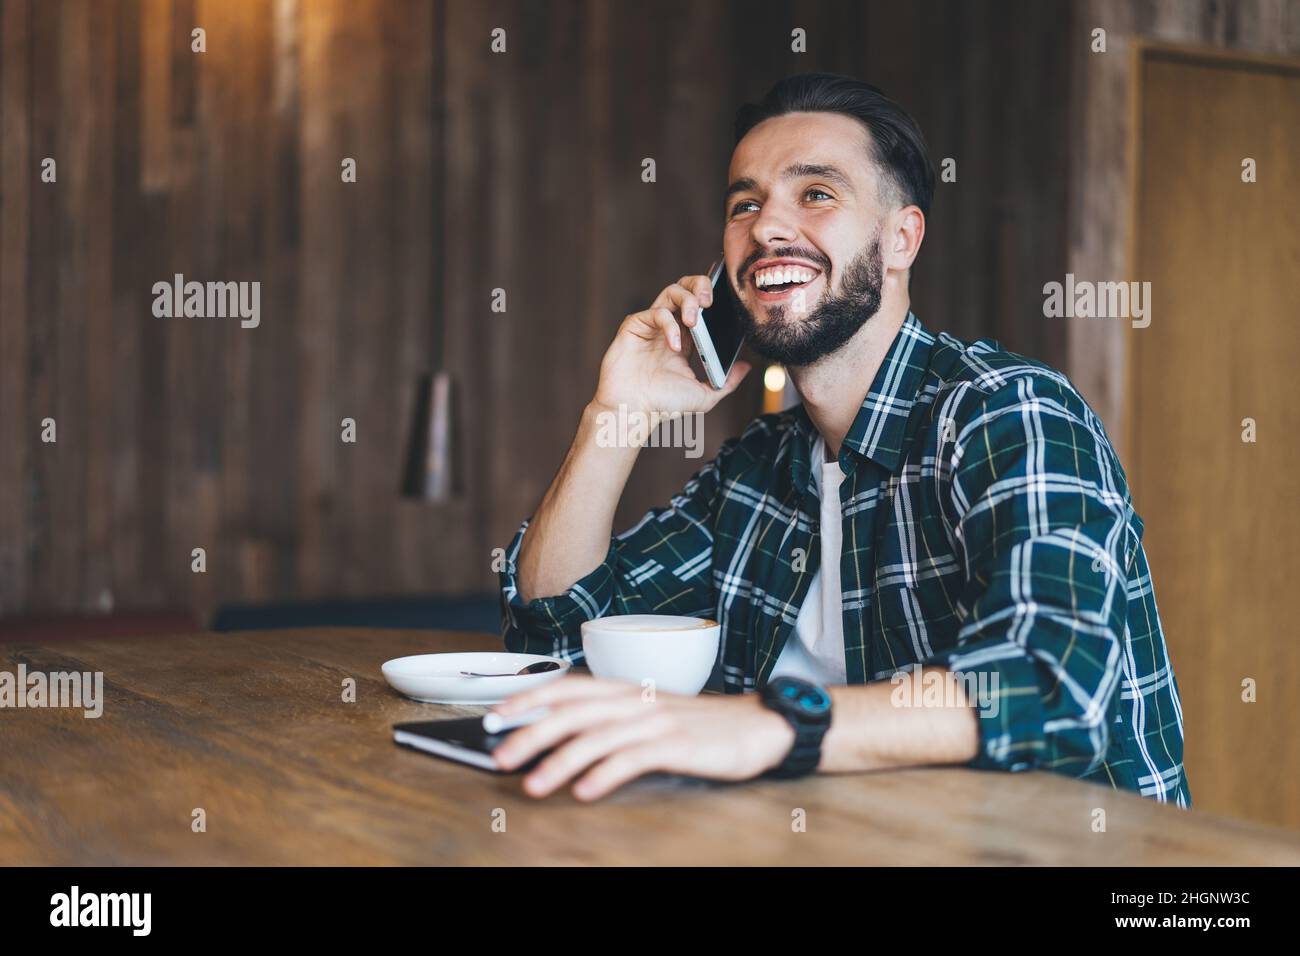 Cheerful Caucasian man using cellphone device for calling enjoying positive conversationv Stock Photo